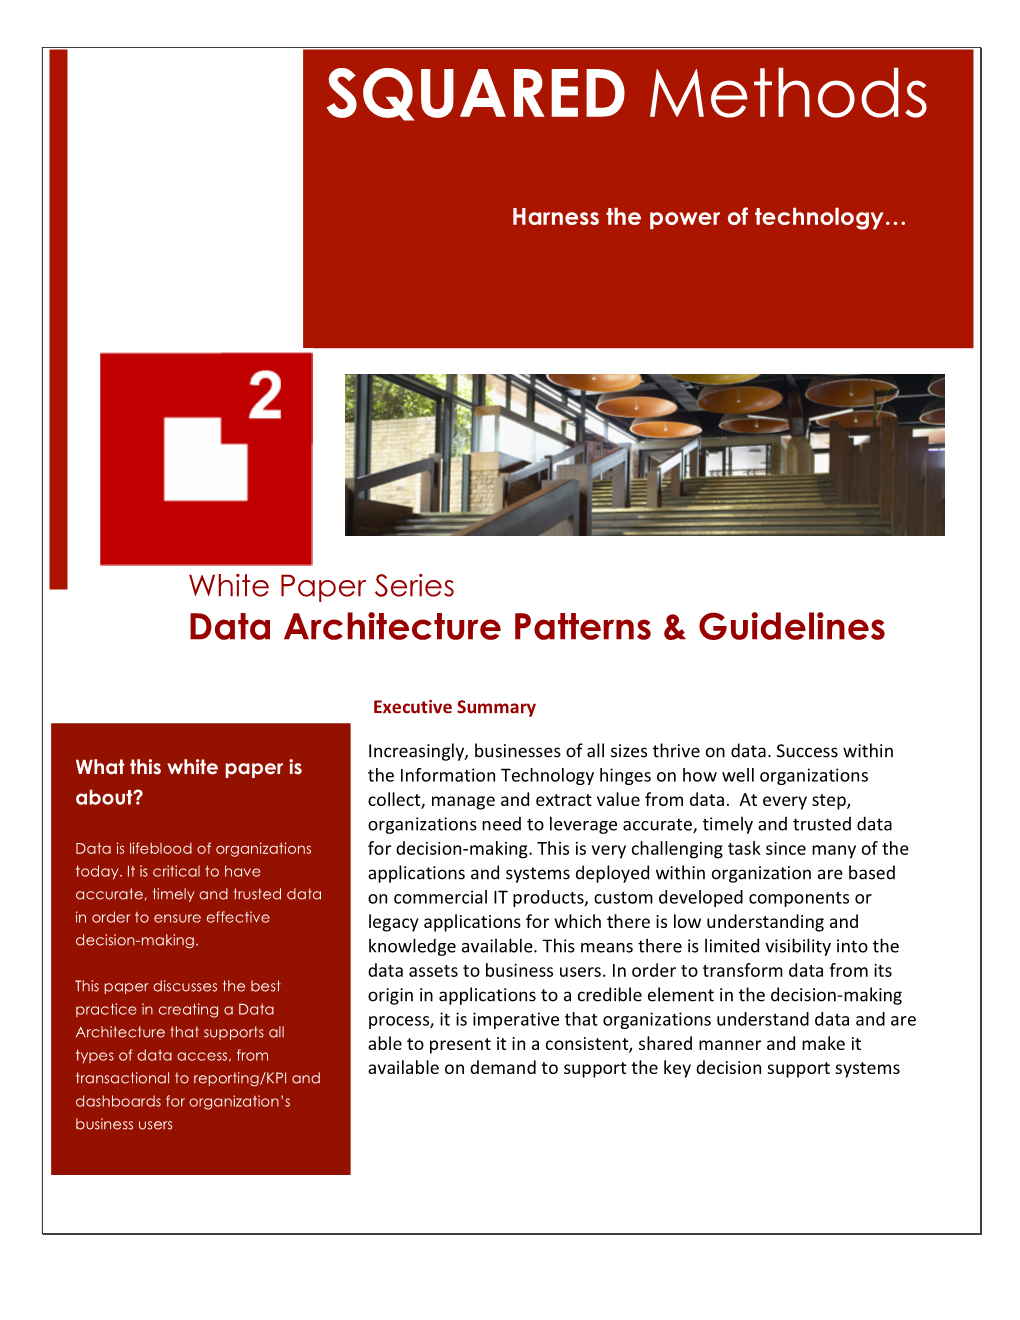 Data Architecture Best Practices